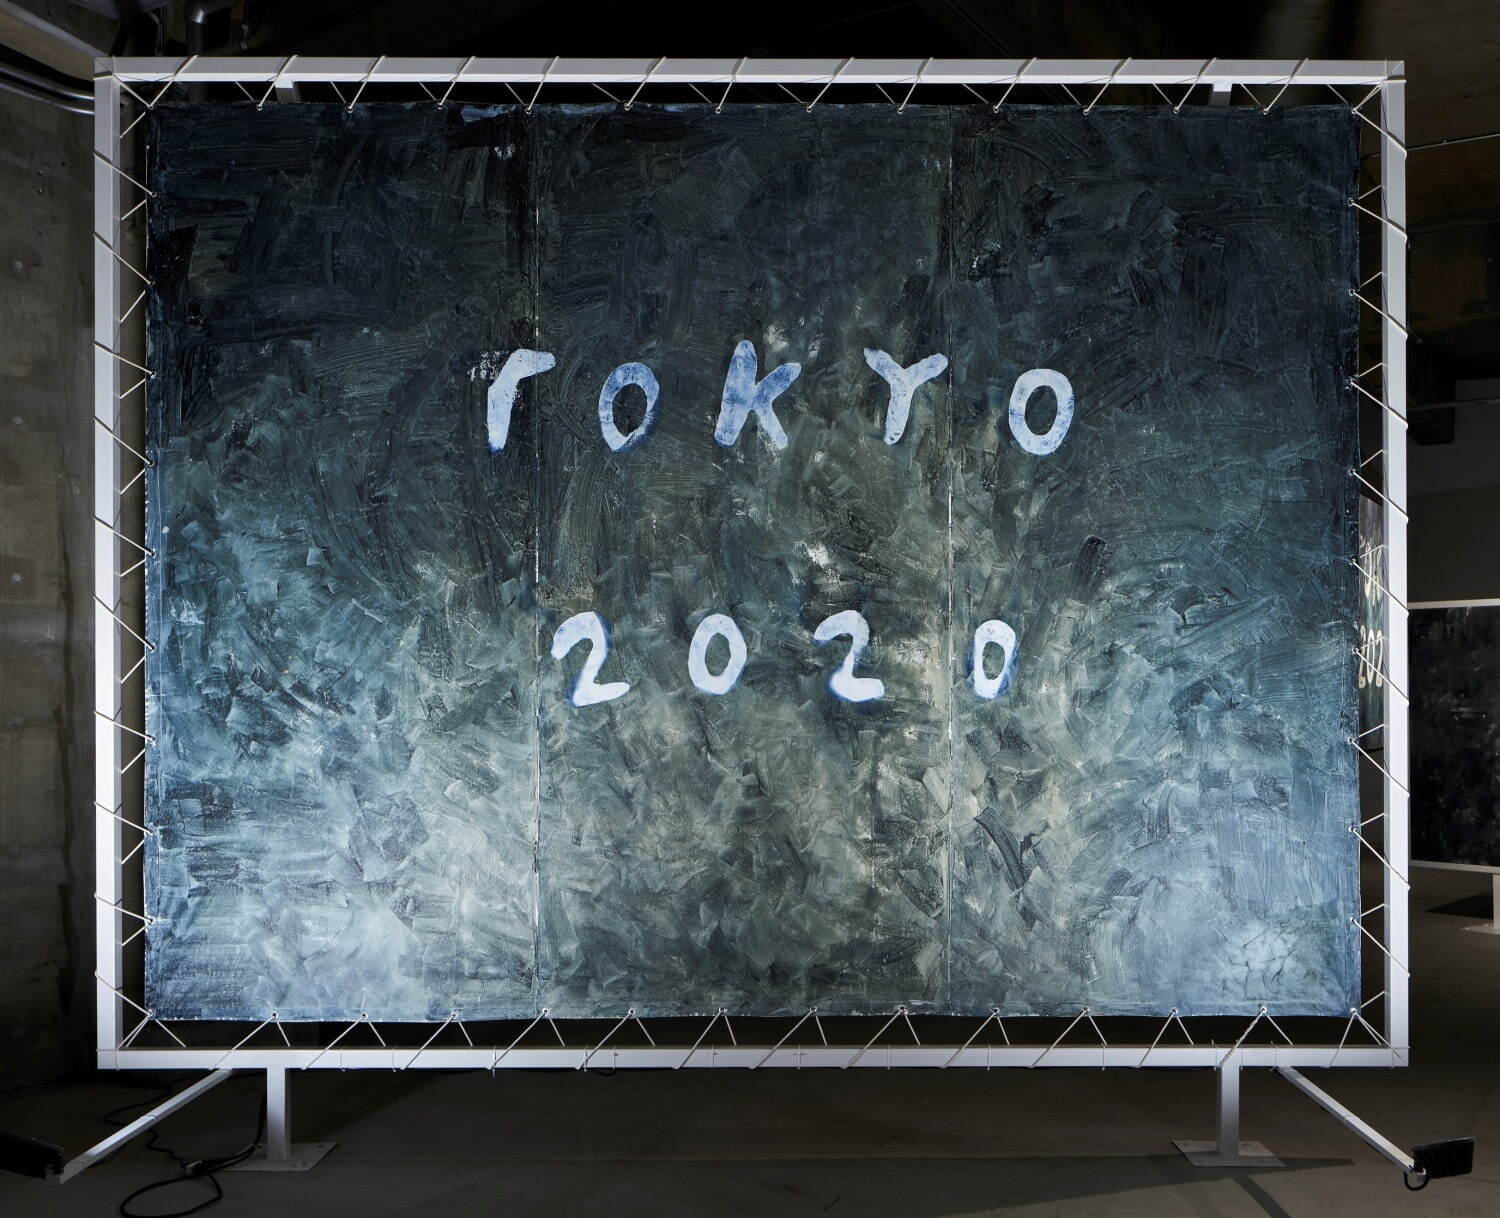 Chim↑Pom《May, 2020, Tokyo (大久保駅前) ─青写真を描く─》2020
Courtesy of the artist and ANOMALY
Photo: Kenji Morita